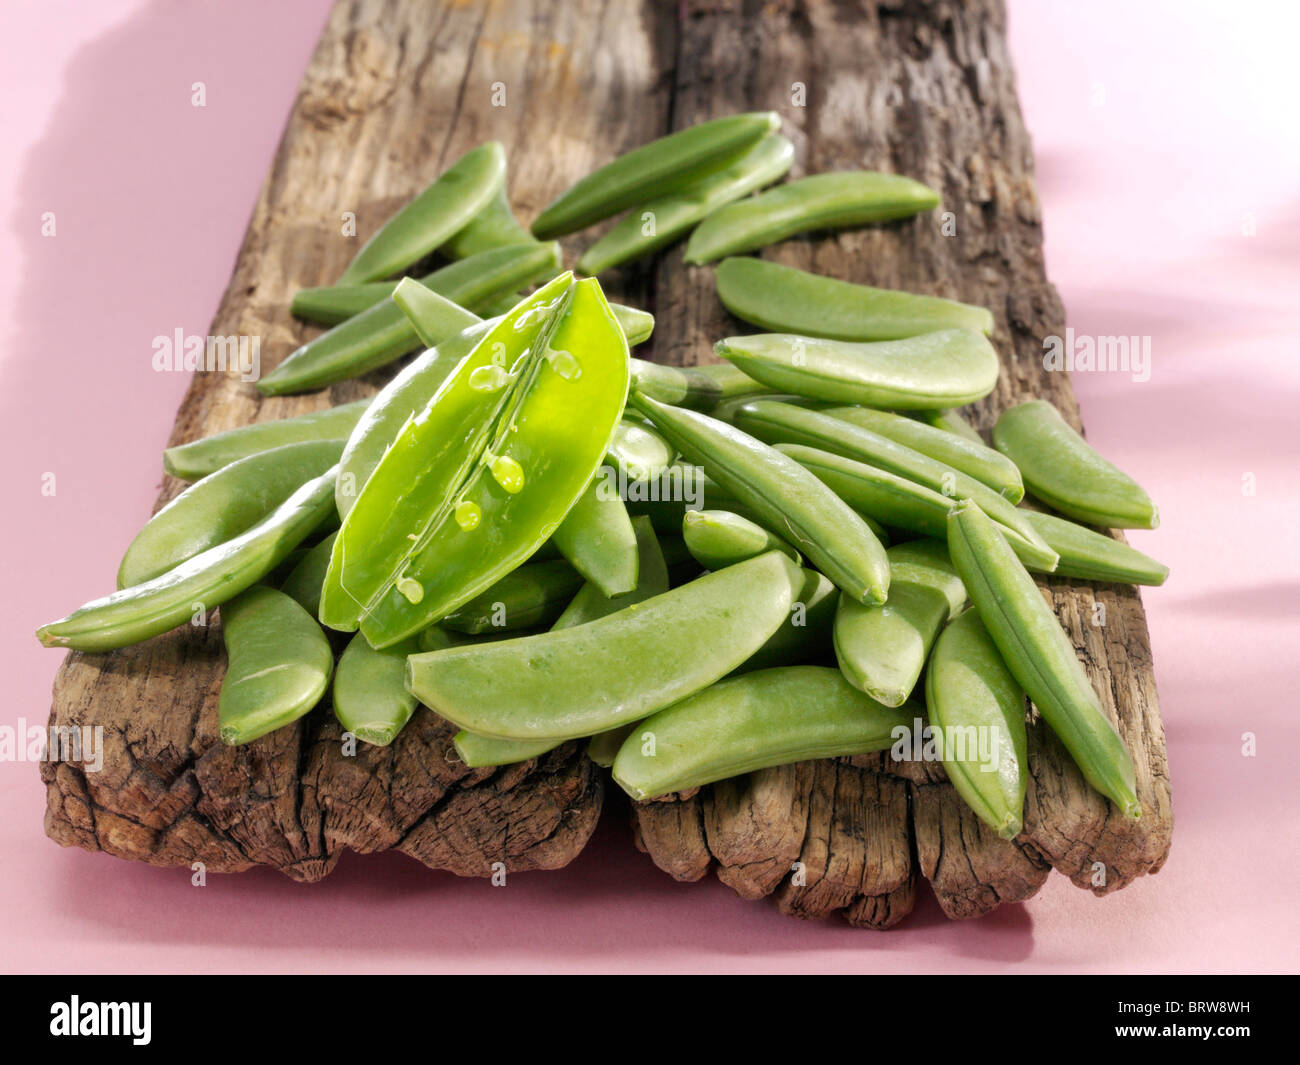 Snap peas (Pisum sativum) on a wooden board Stock Photo